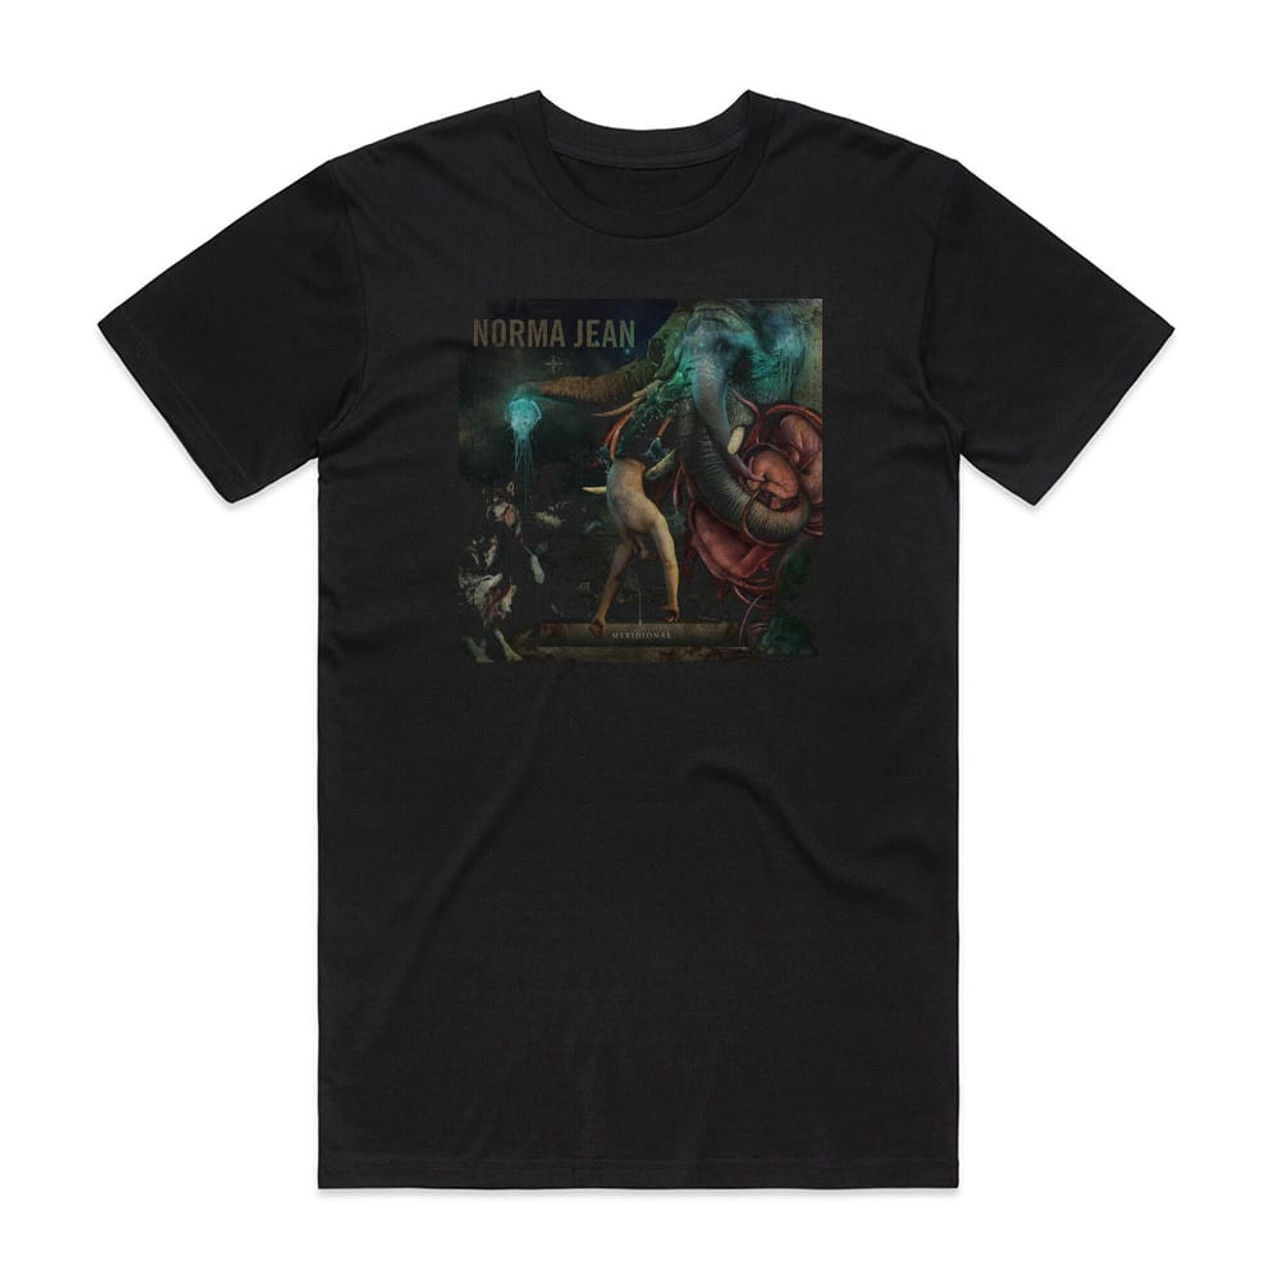 Norma Jean Meridional Album Cover T-Shirt Black